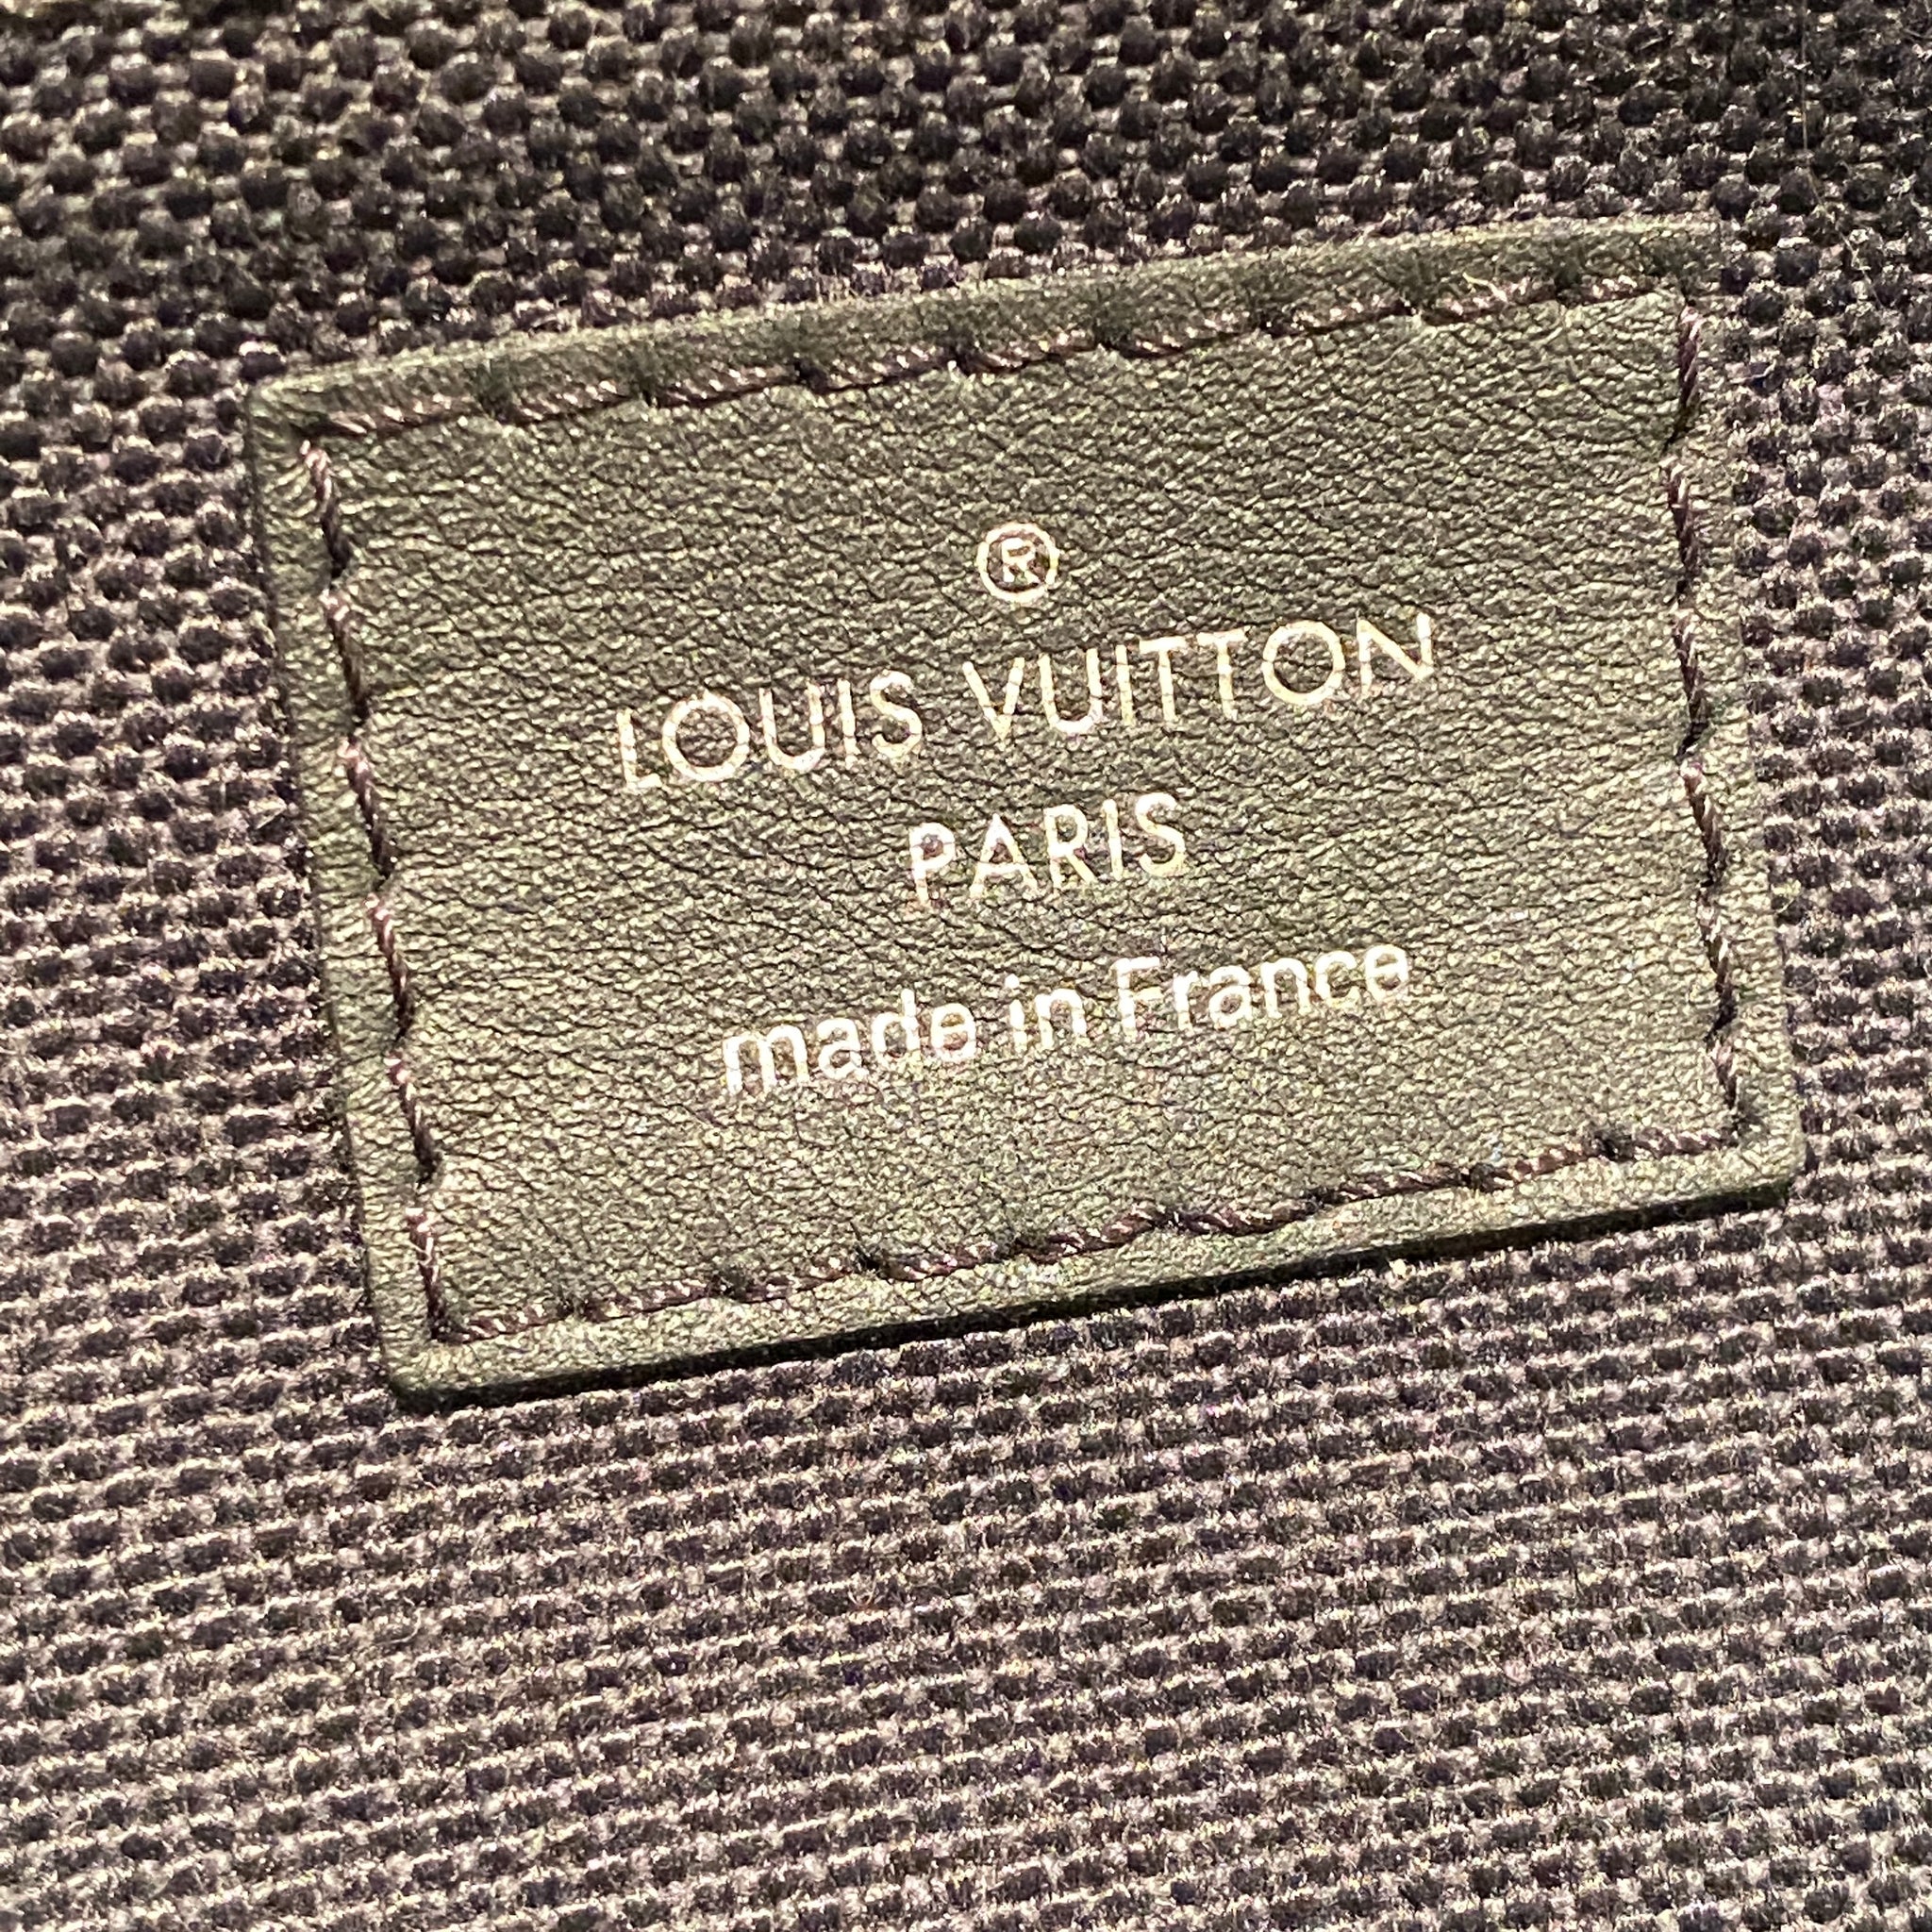 Louis Vuitton Backpack Canyon Bleu Marine